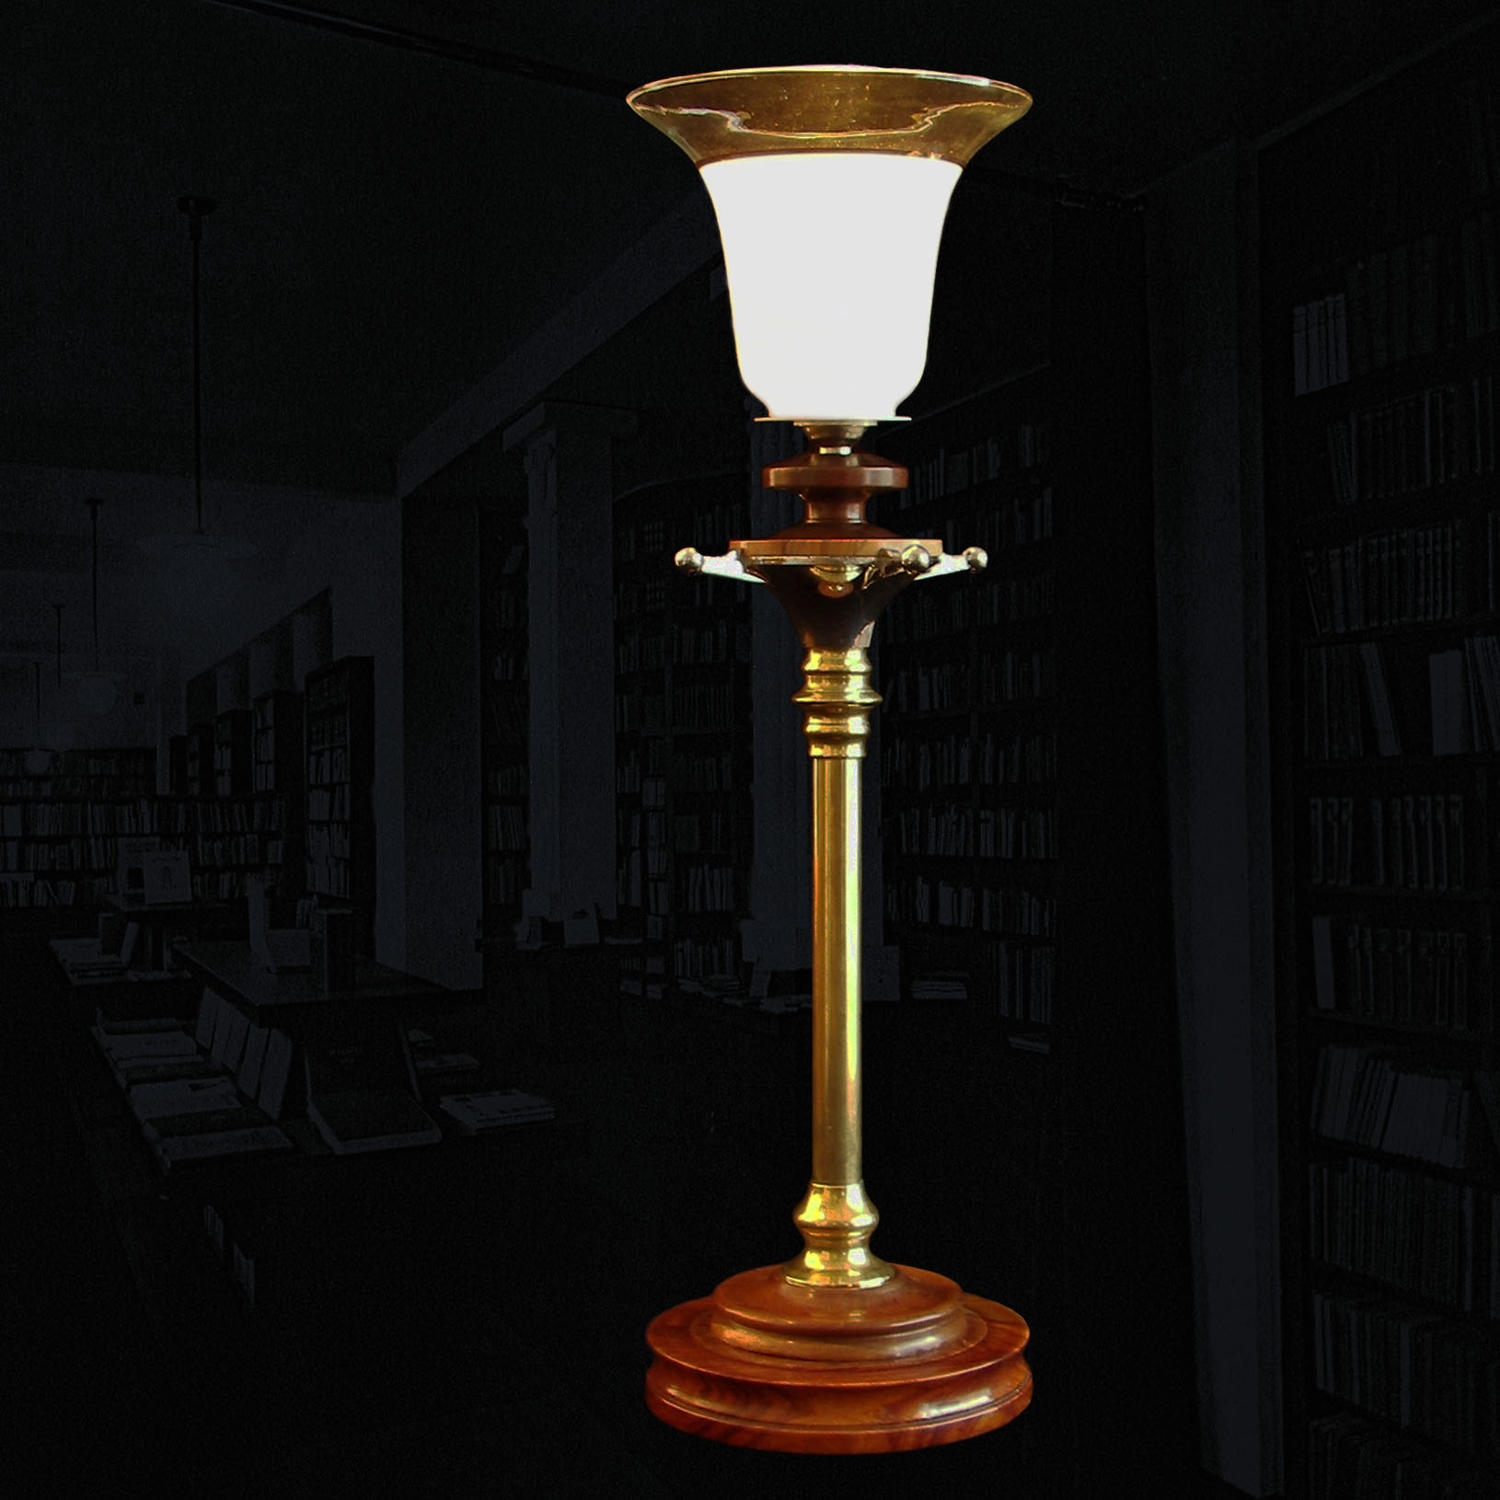 Unique artist-designed lamp - Cocktail - by Gilles Bourlet Dartmouth